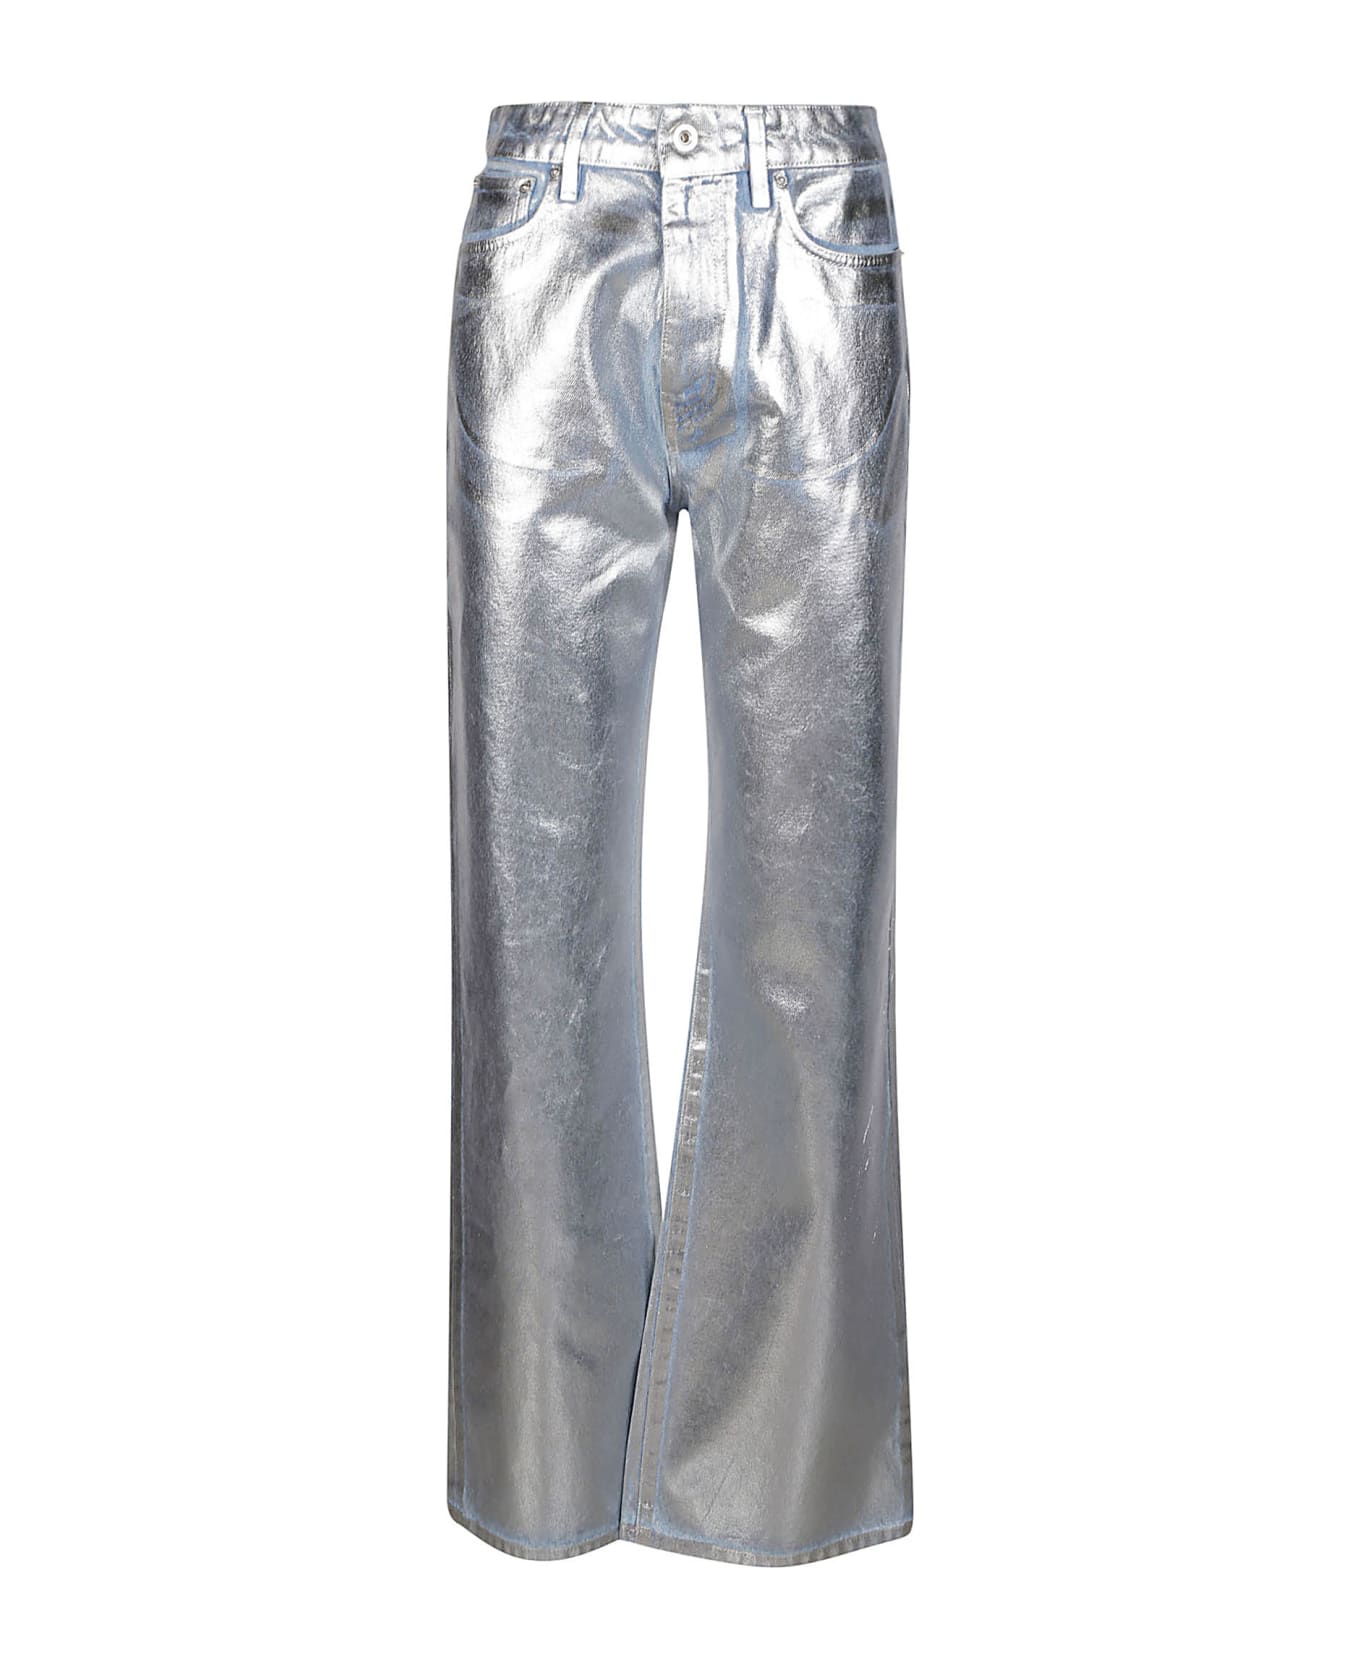 Paco Rabanne Metallic Pant - Light Silver